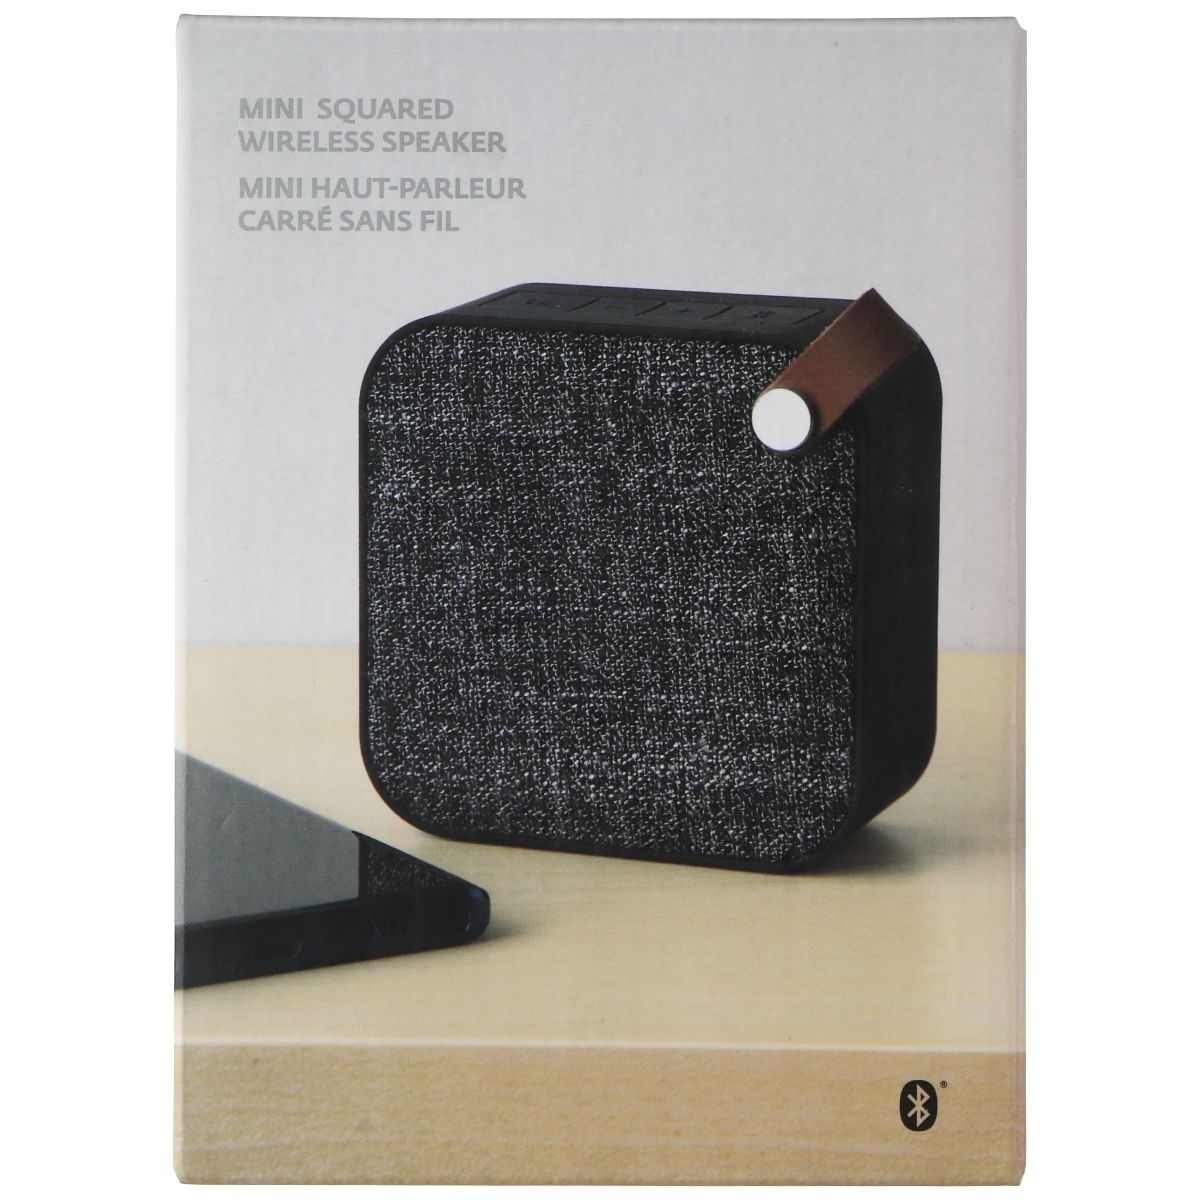 The Source - Mini Squared Wireless Bluetooth Speaker - Black/Gray (Refurbished)